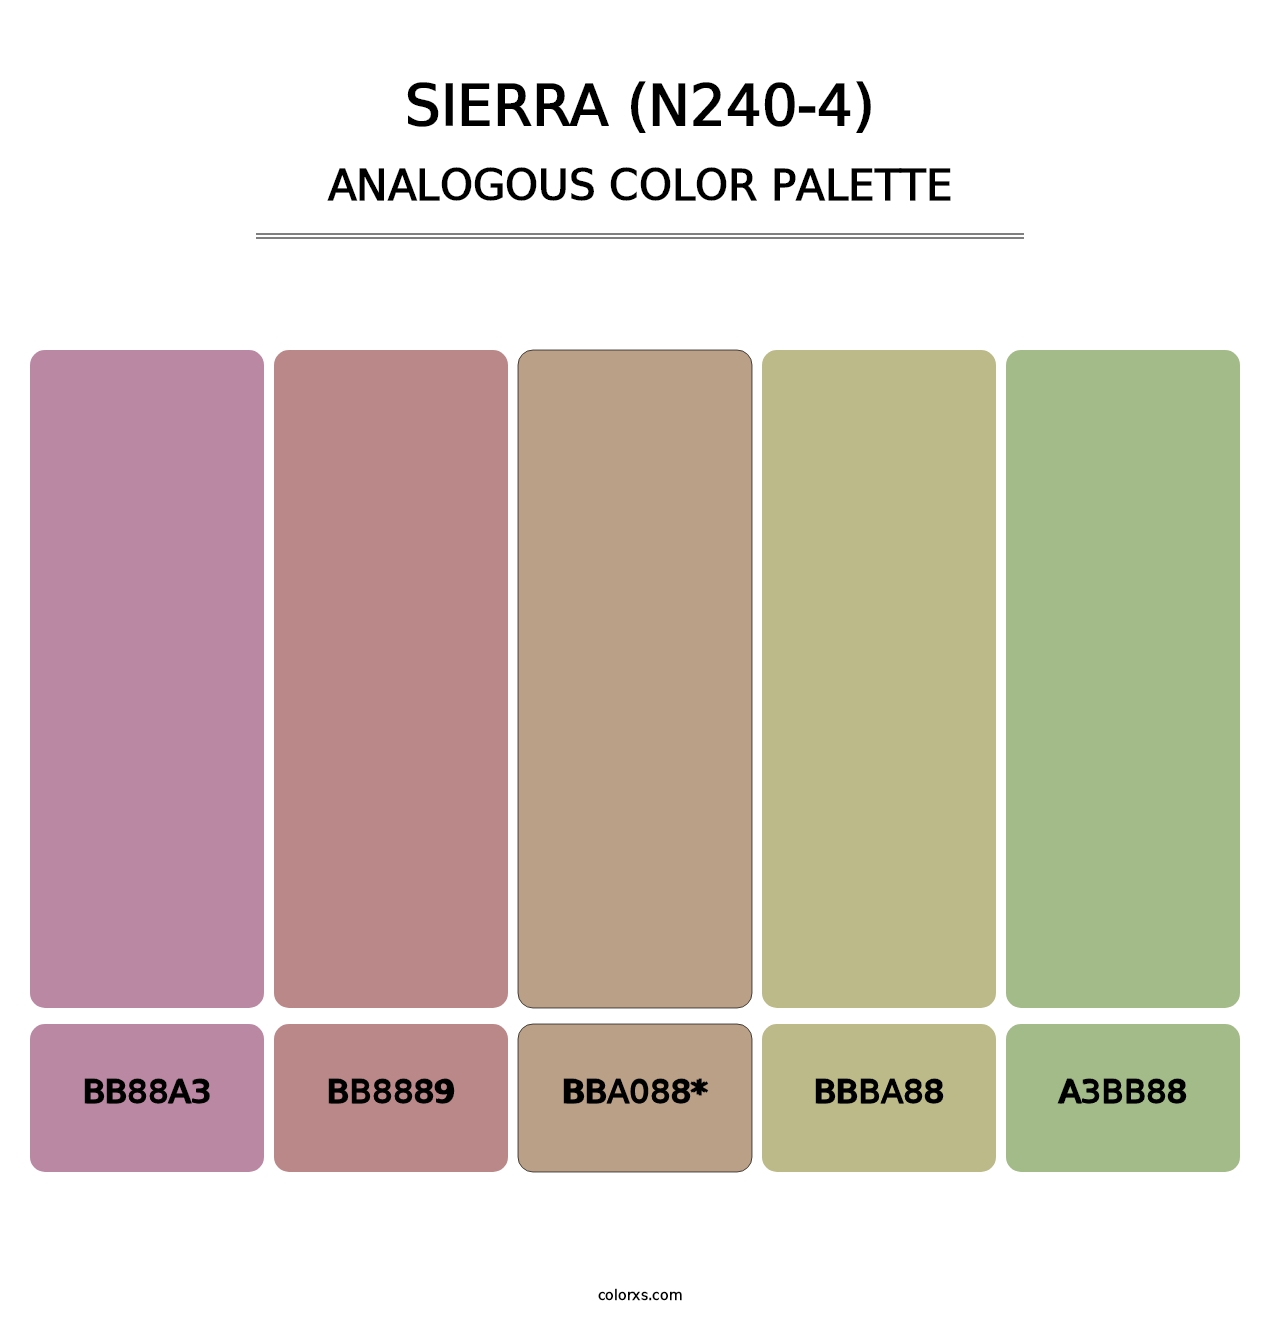 Sierra (N240-4) - Analogous Color Palette